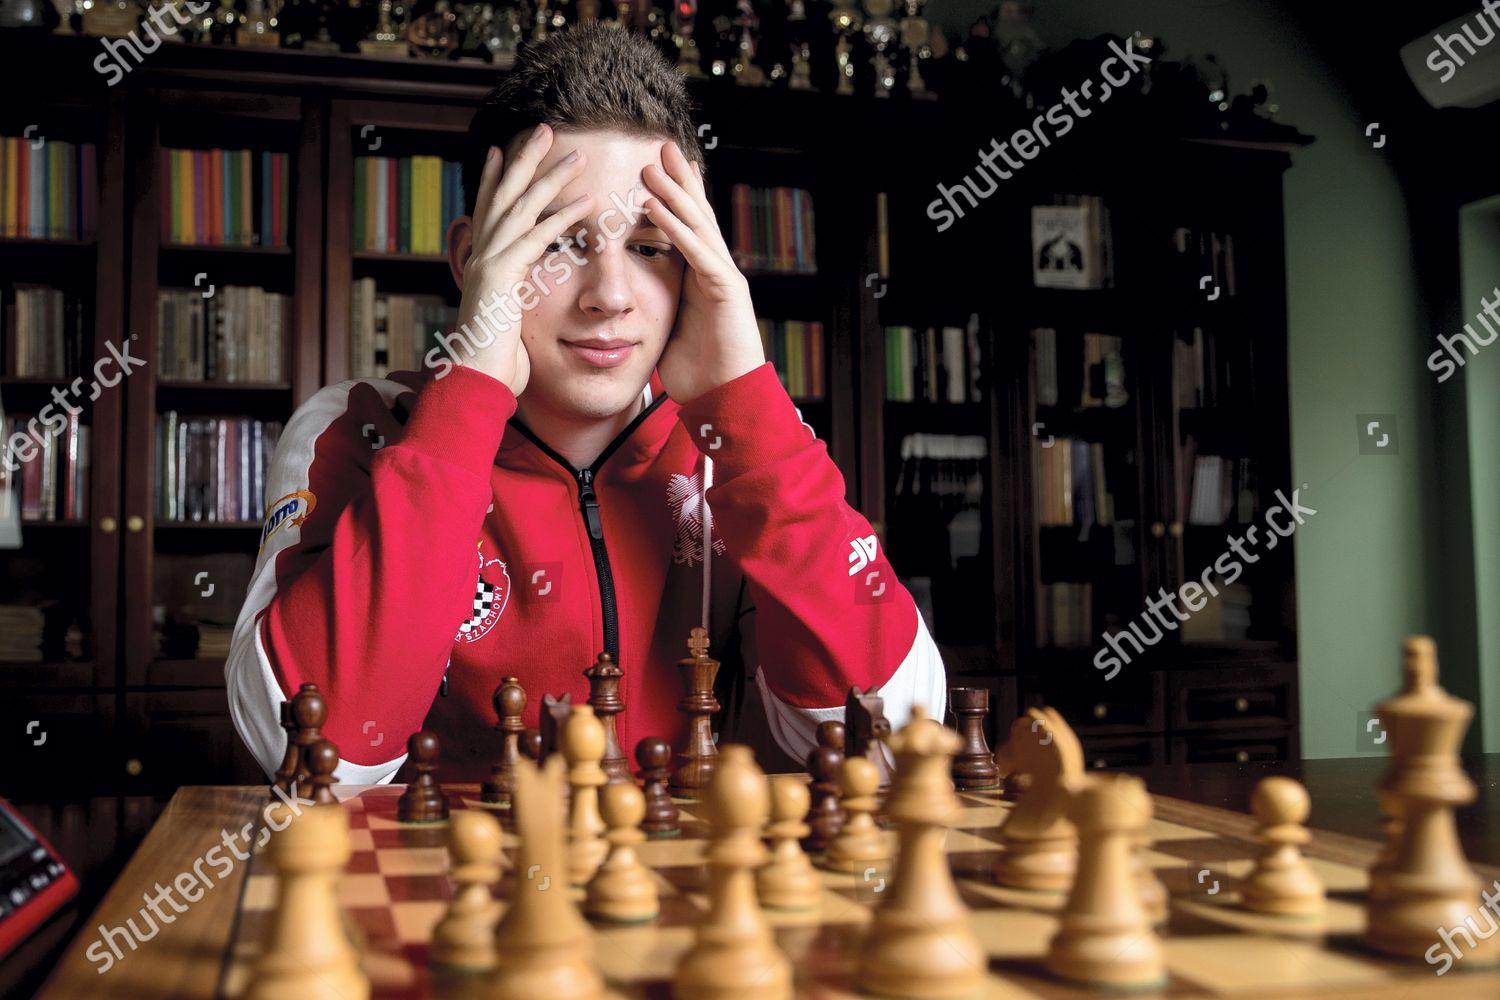 Jan-Krzysztof Duda's Best Chess Games 